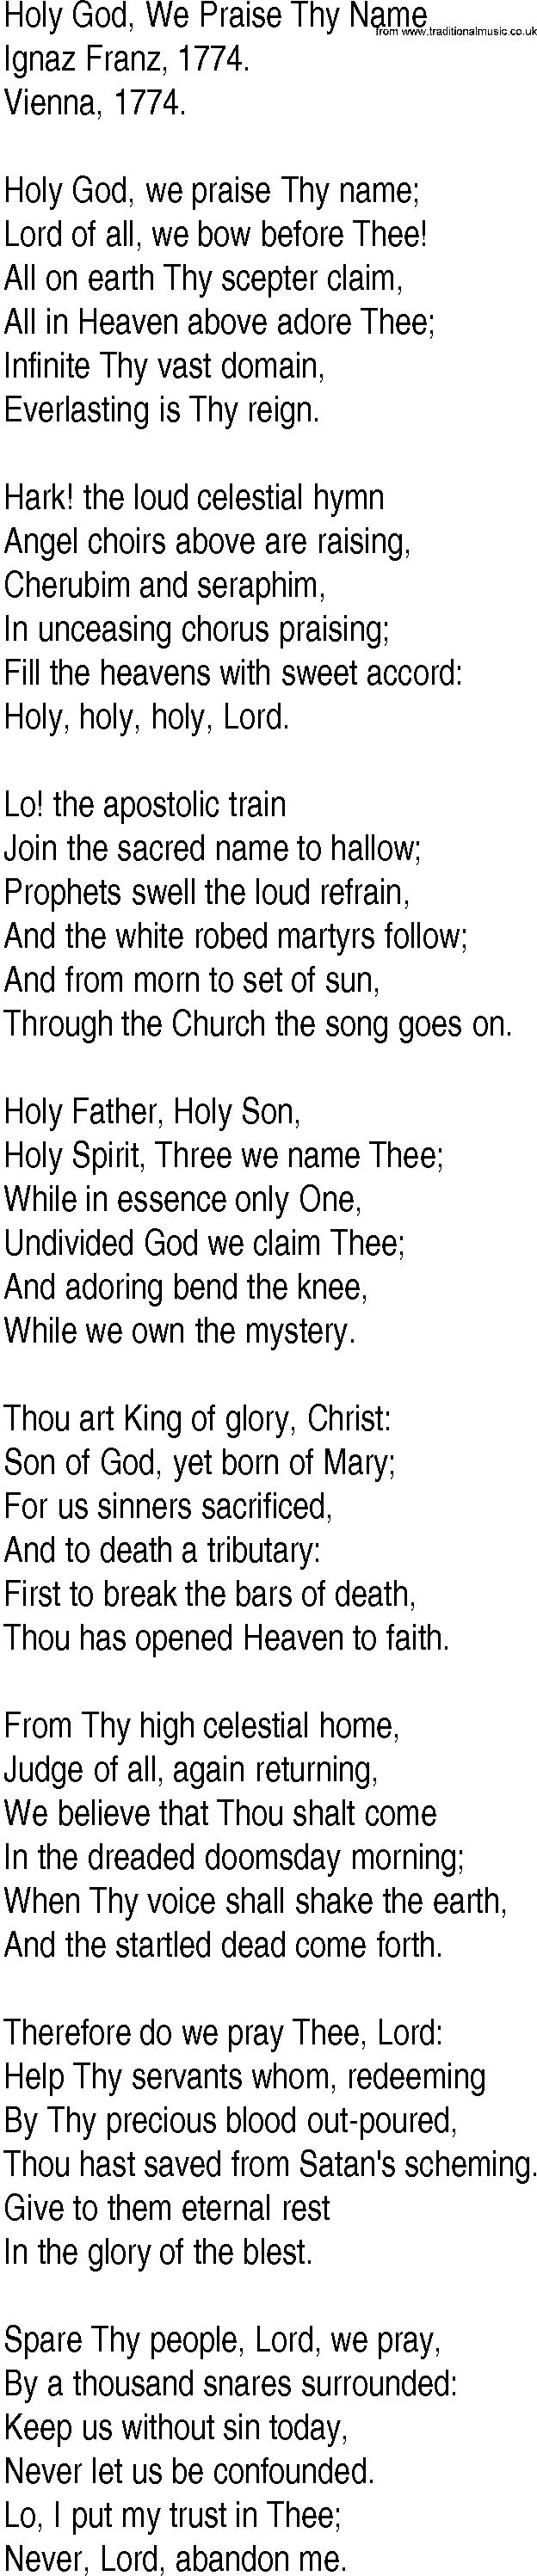 Hymn and Gospel Song: Holy God, We Praise Thy Name by Ignaz Franz lyrics